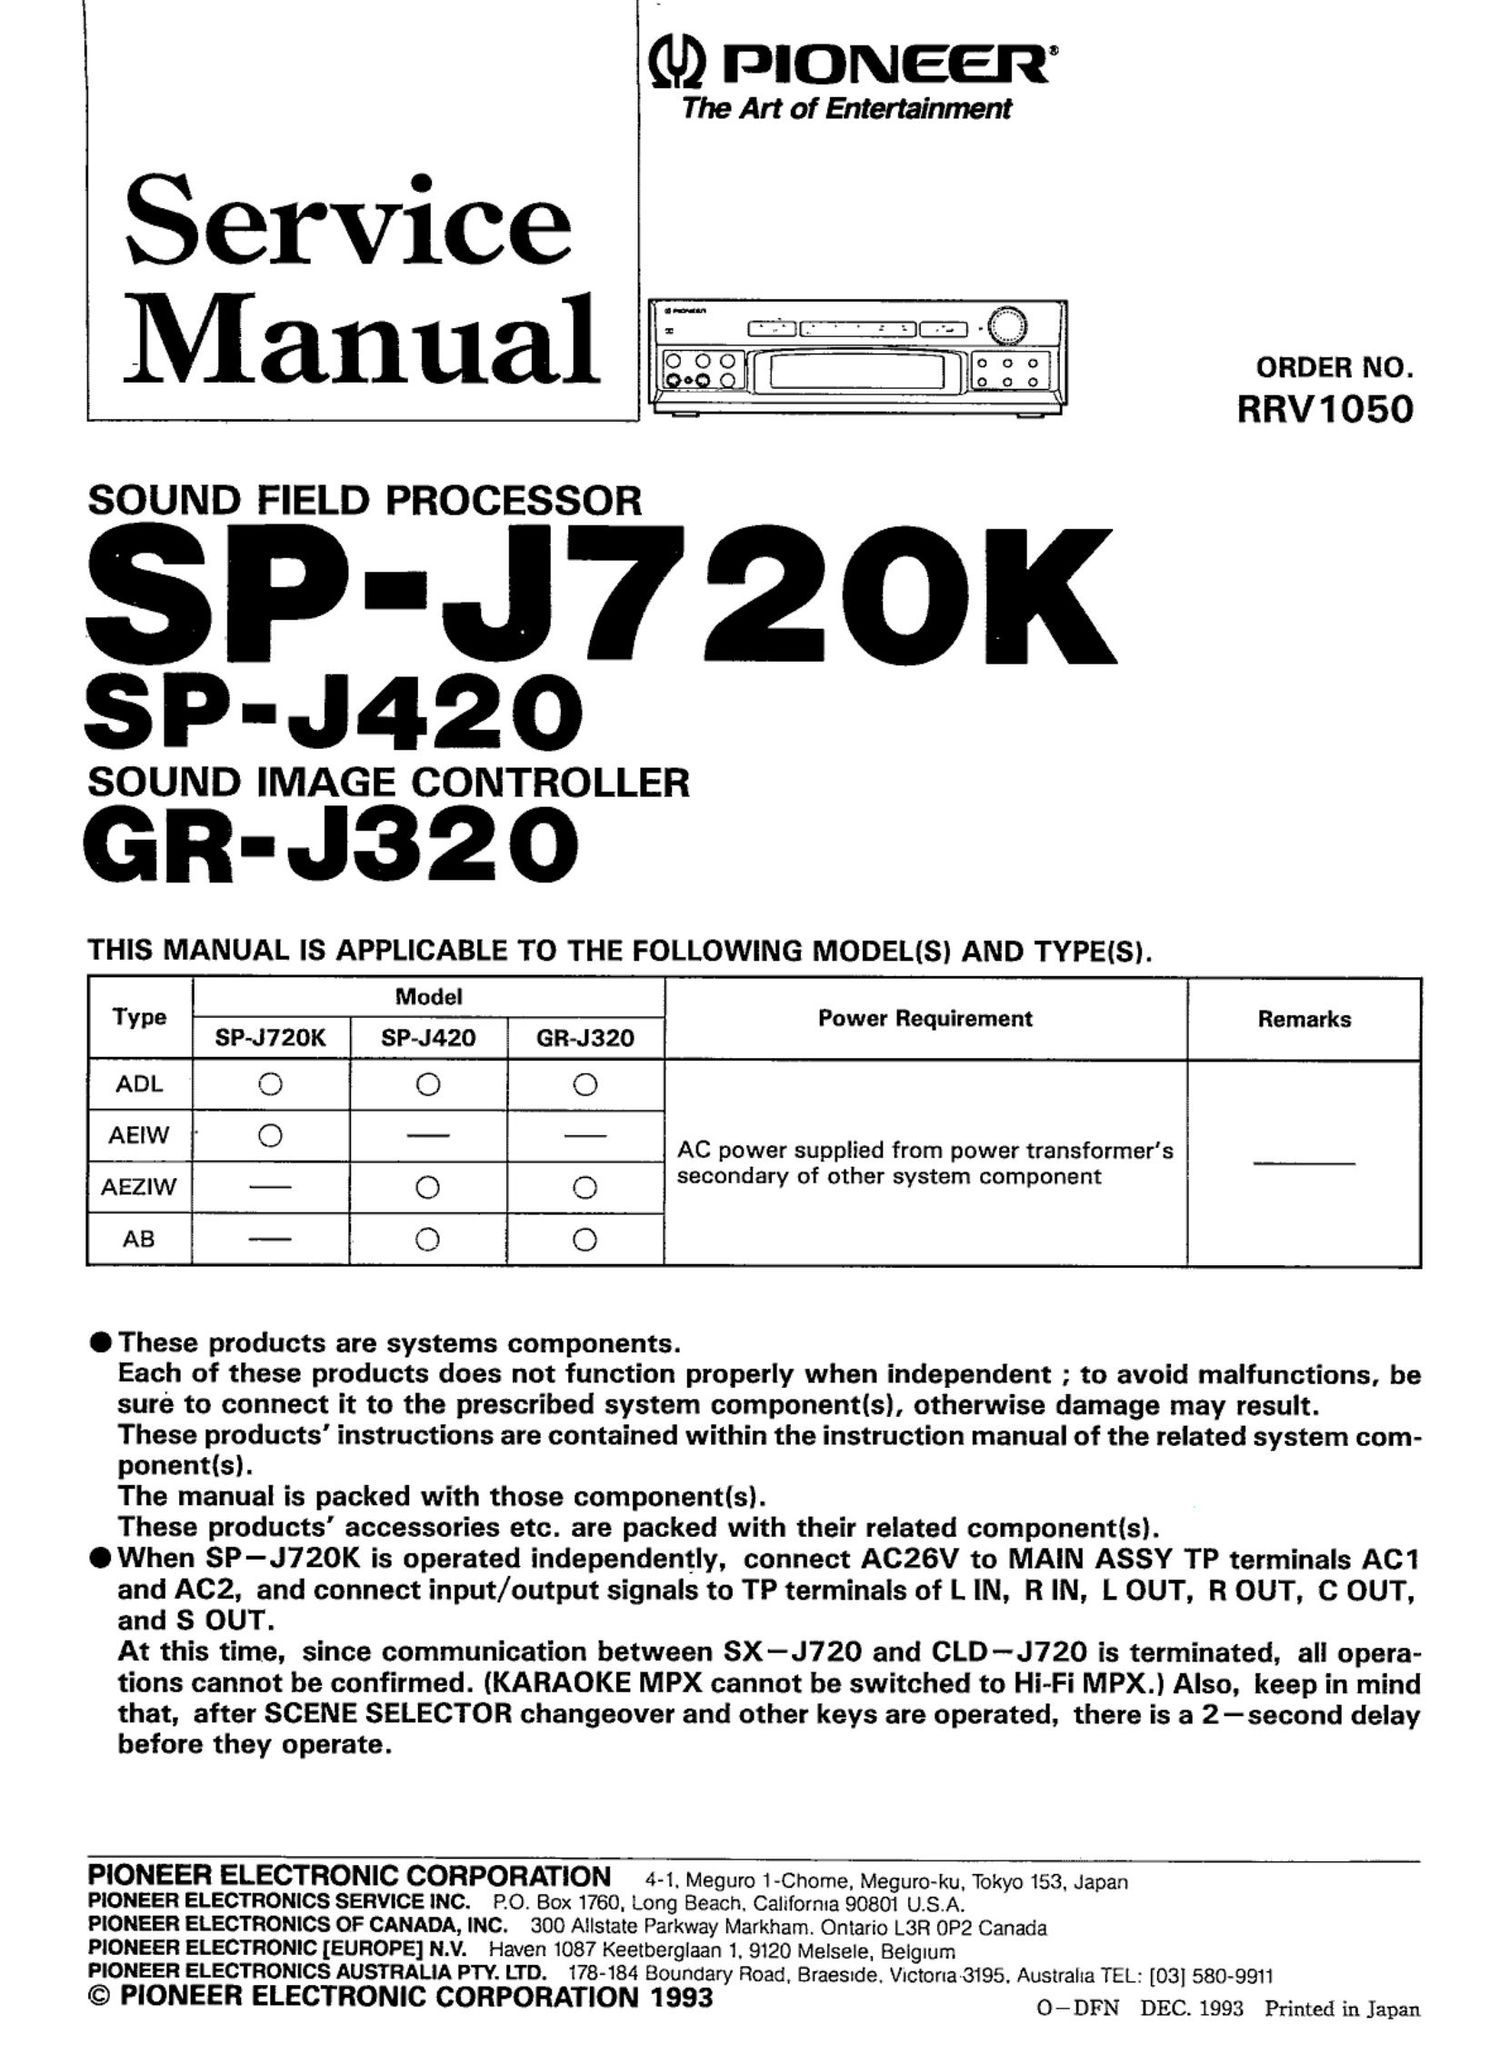 pioneer spj 720 k service manual